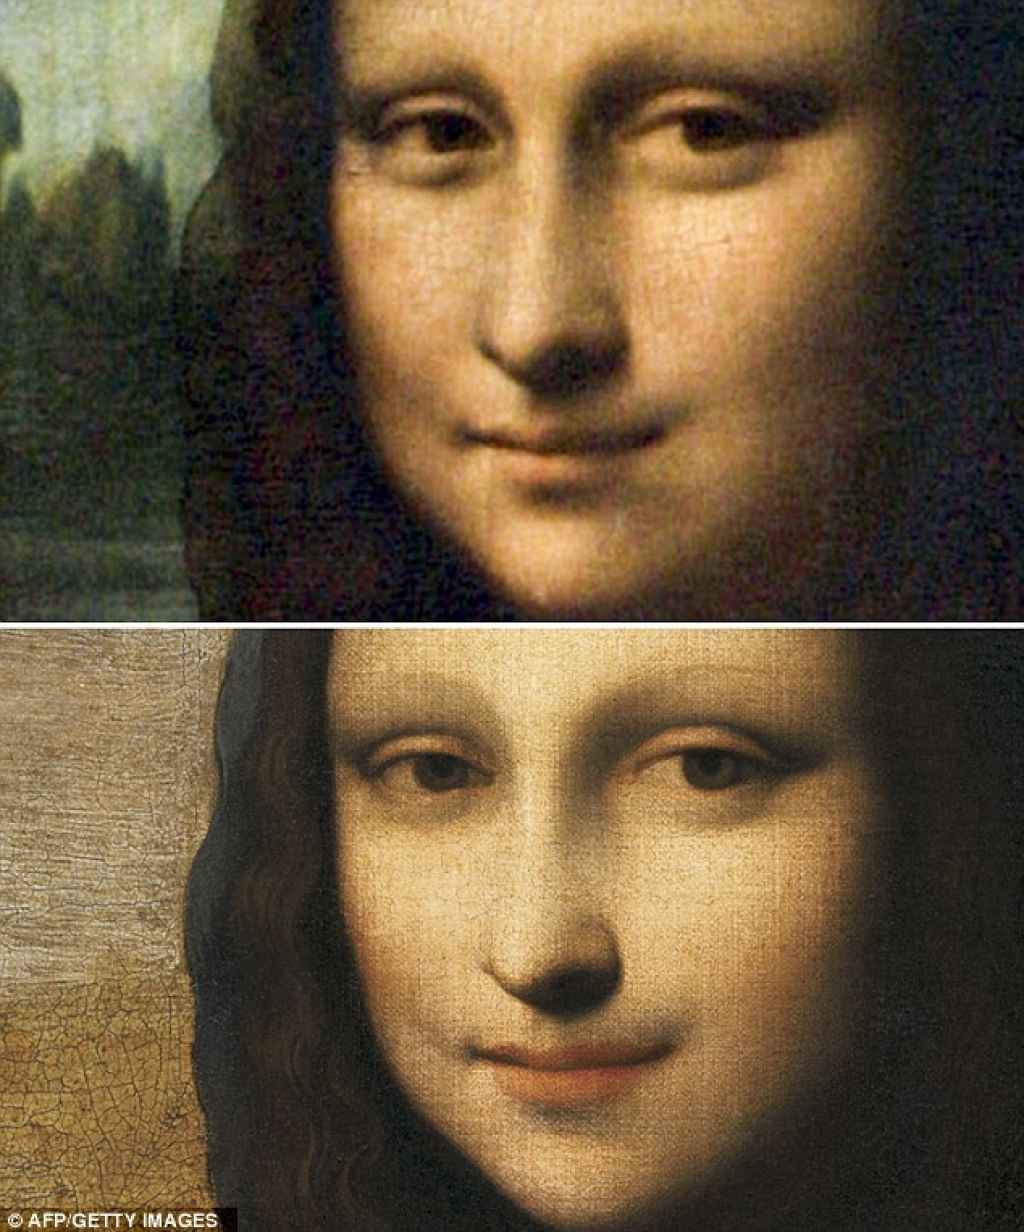 Dokazano: Mona Liza je imela predhodnico